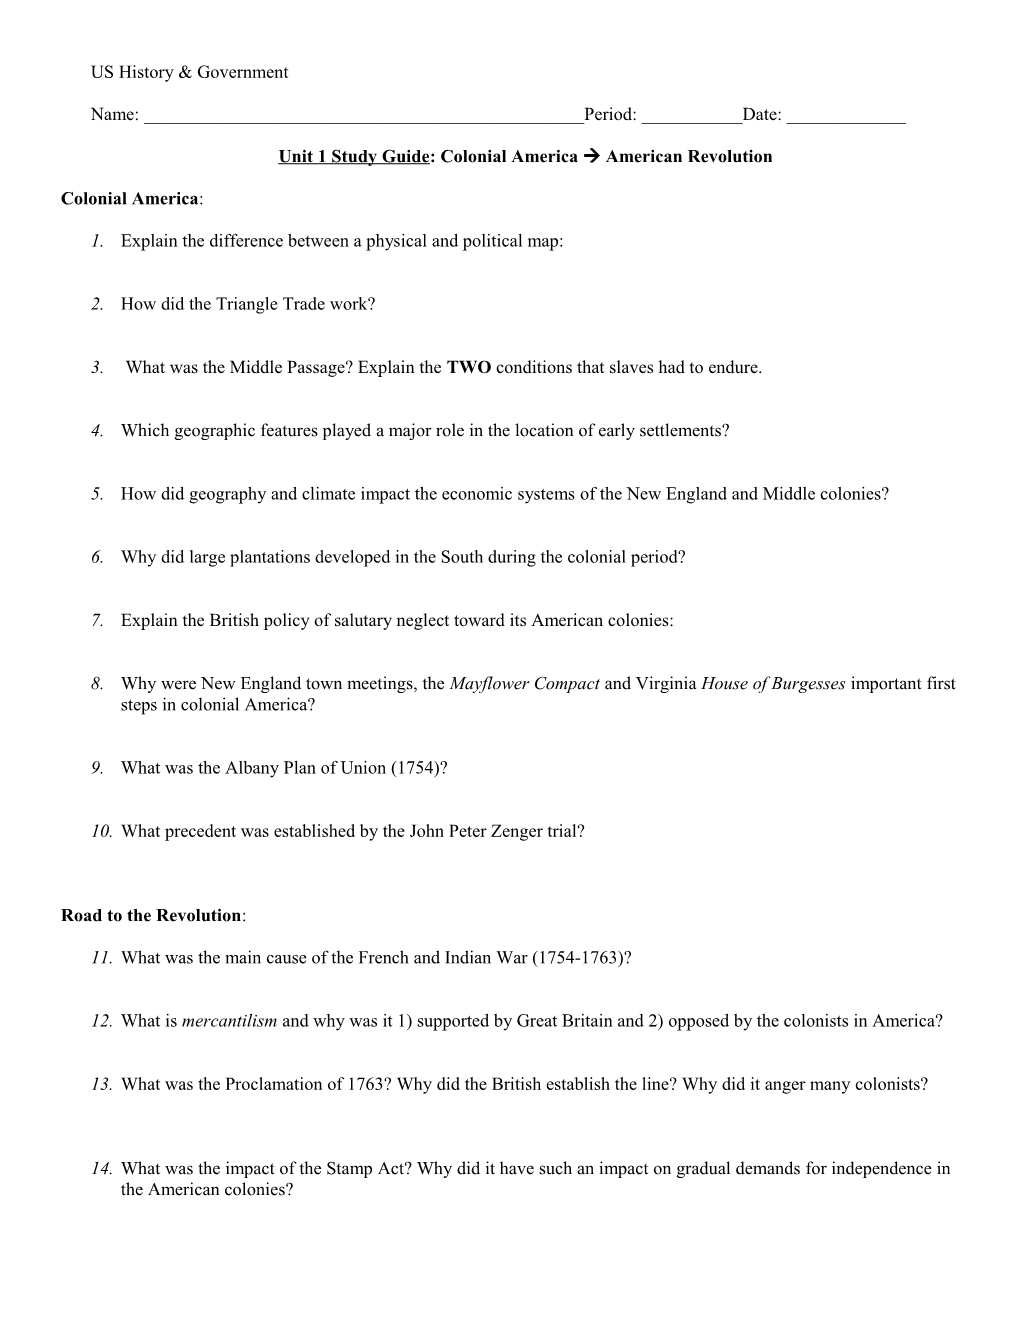 Unit 1 Study Guide: Colonial America American Revolution